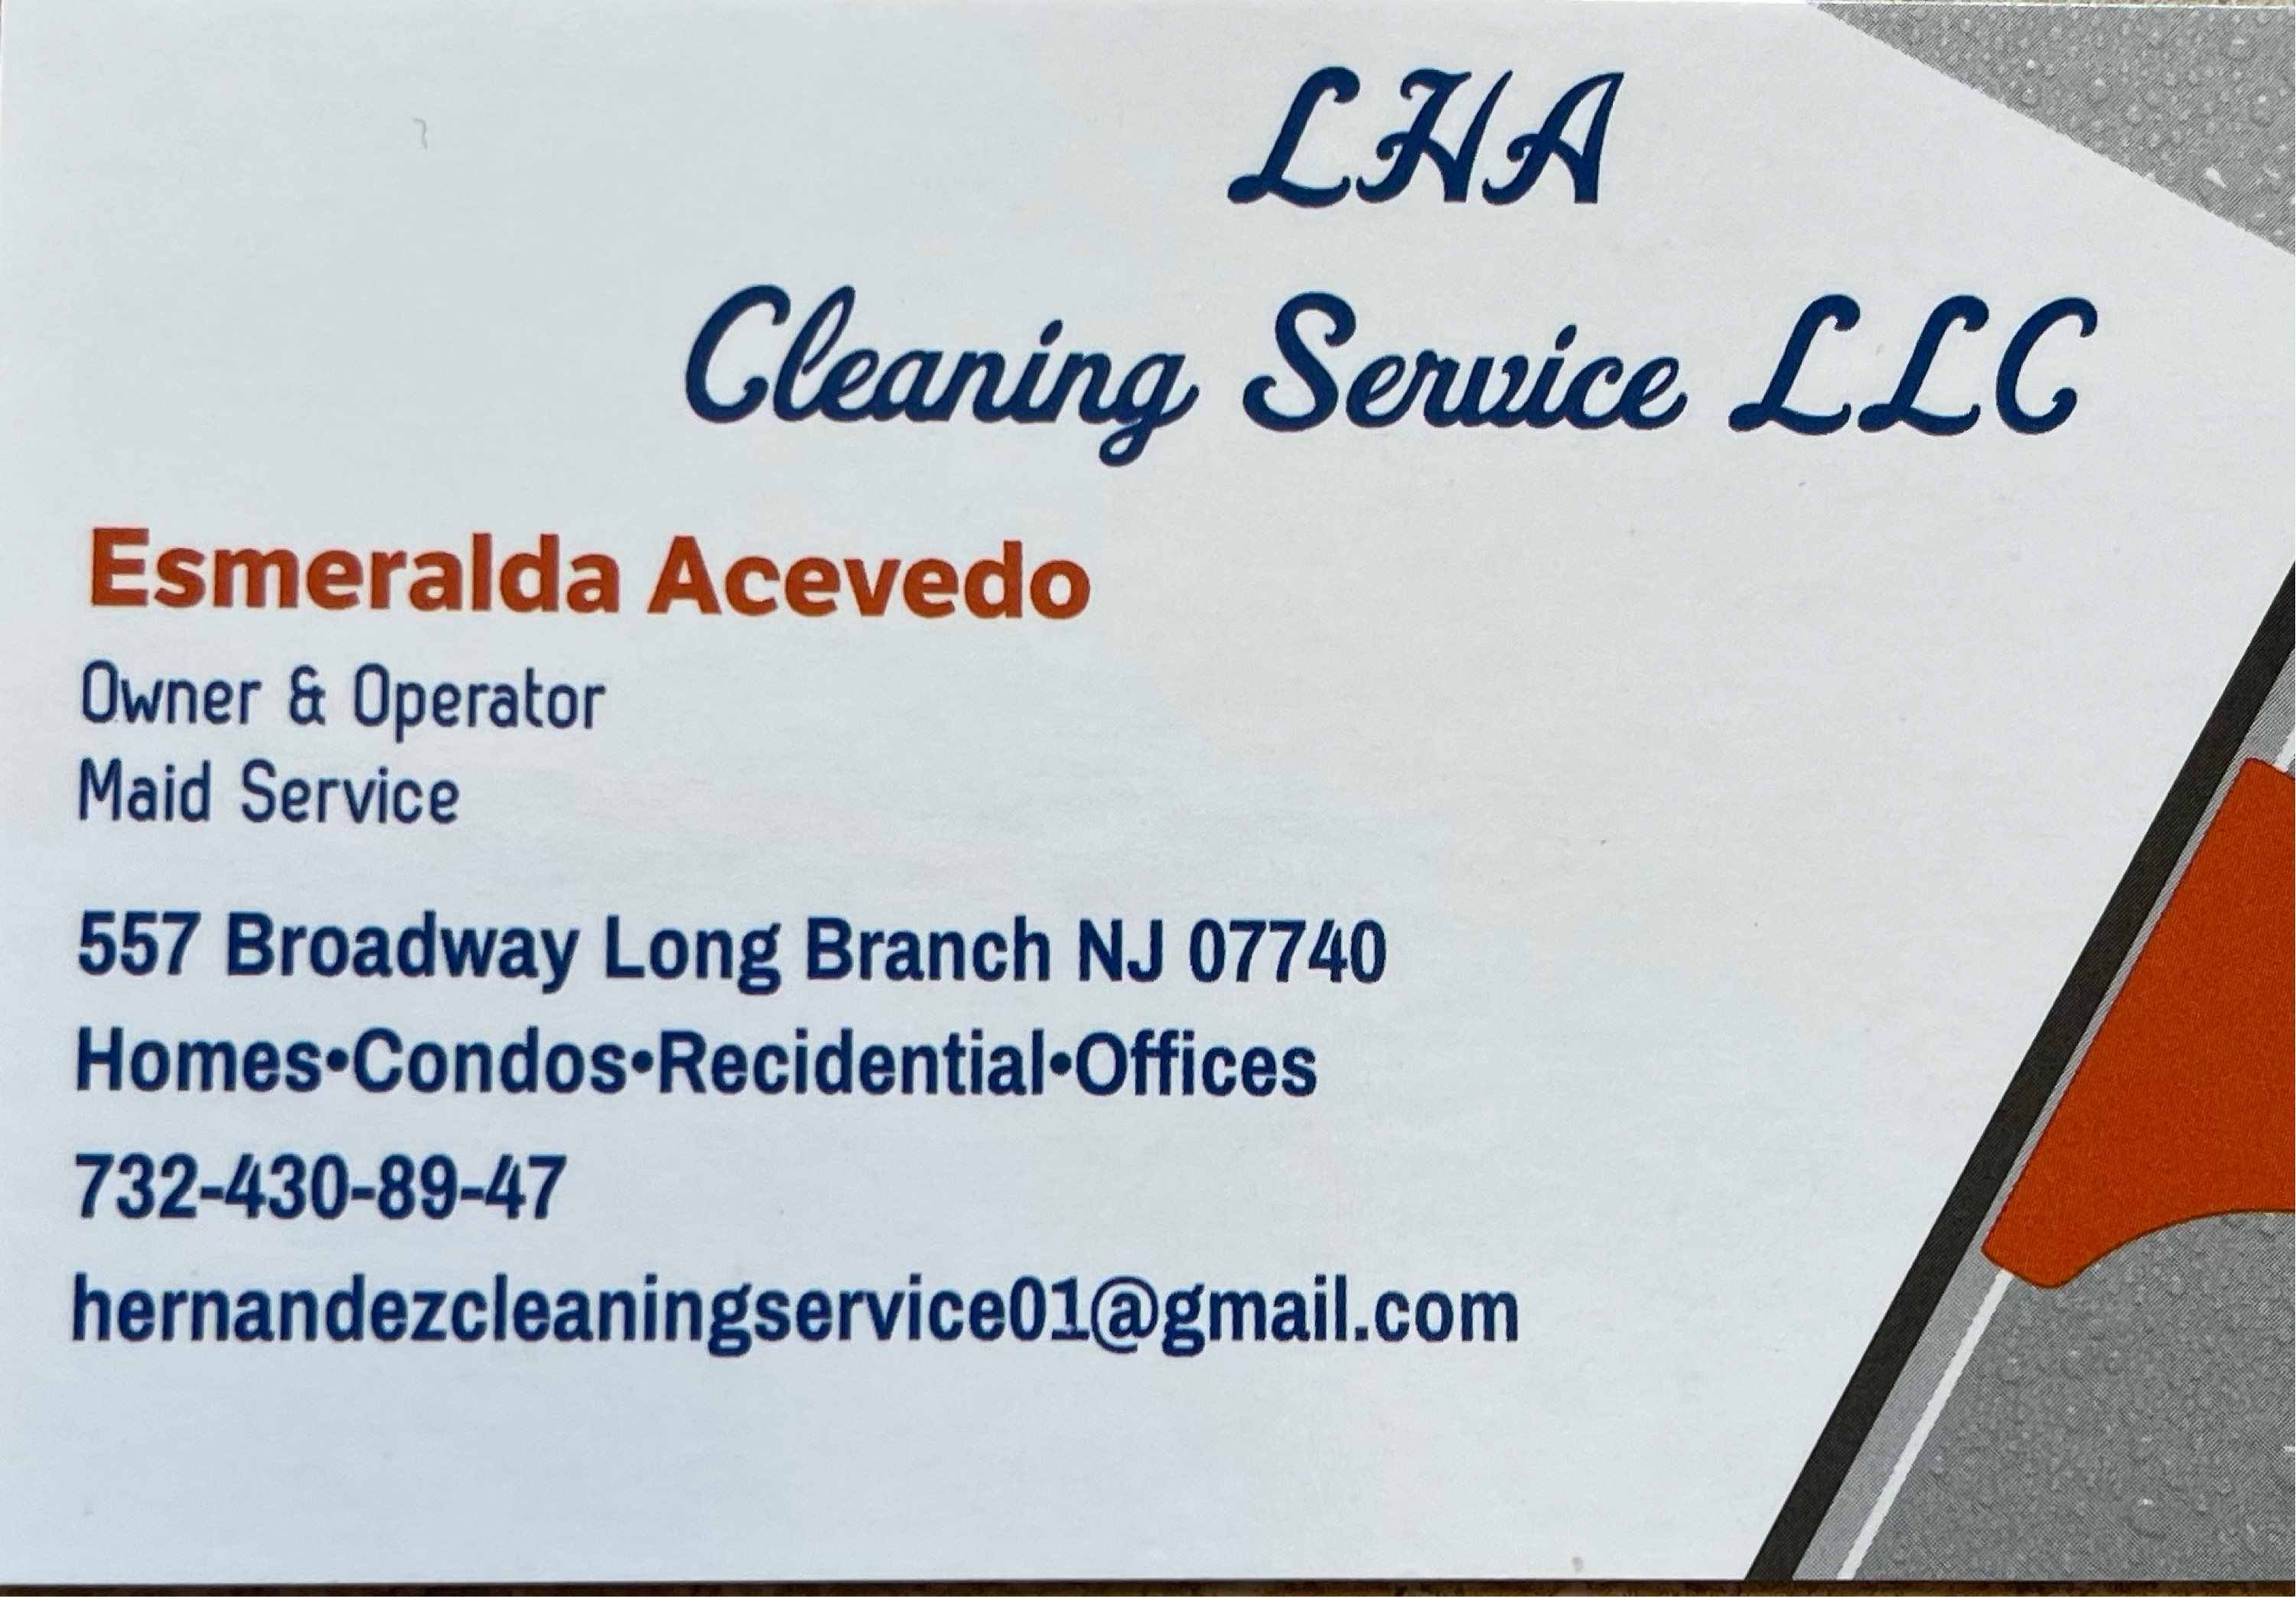 LHA Cleaning Service, LLC Logo